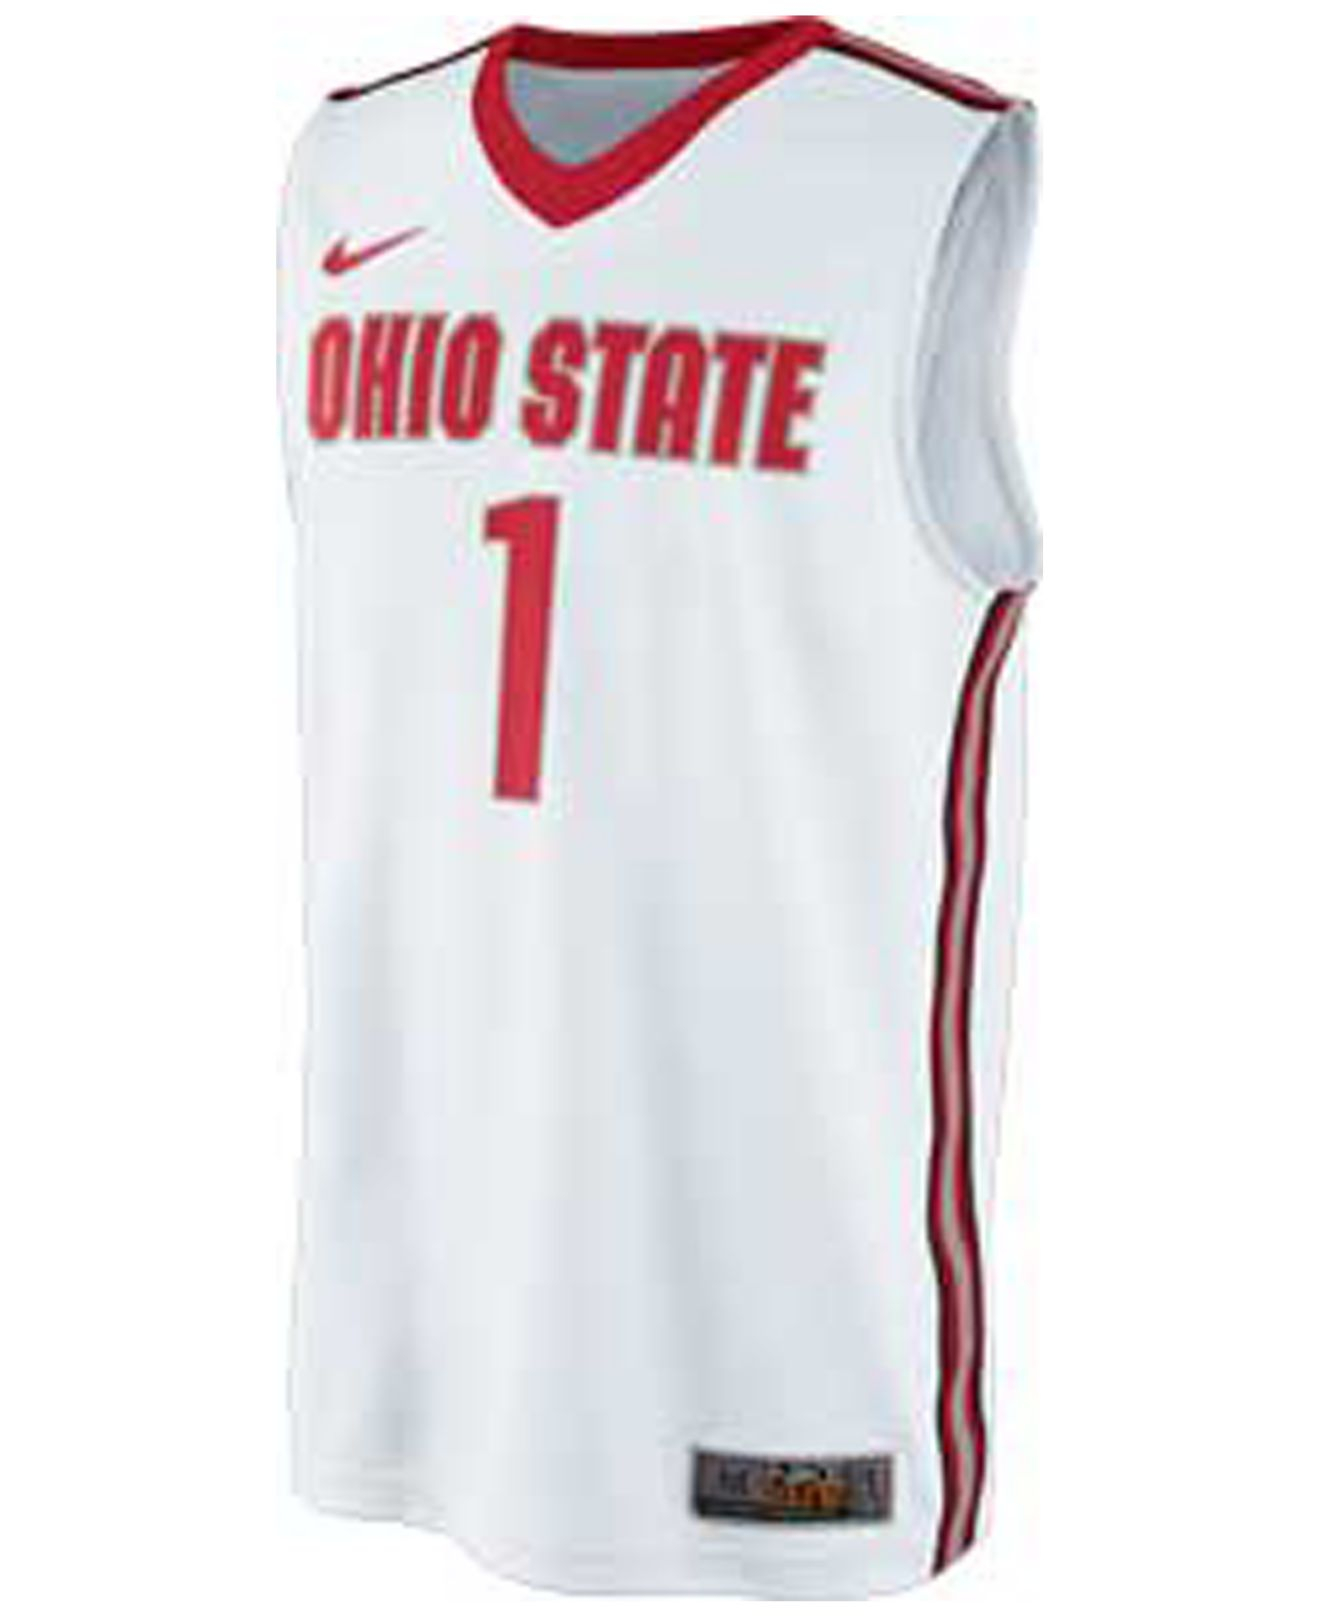 Nike Ohio State Buckeyes Men's Basketball Jersey Scarlet Grey